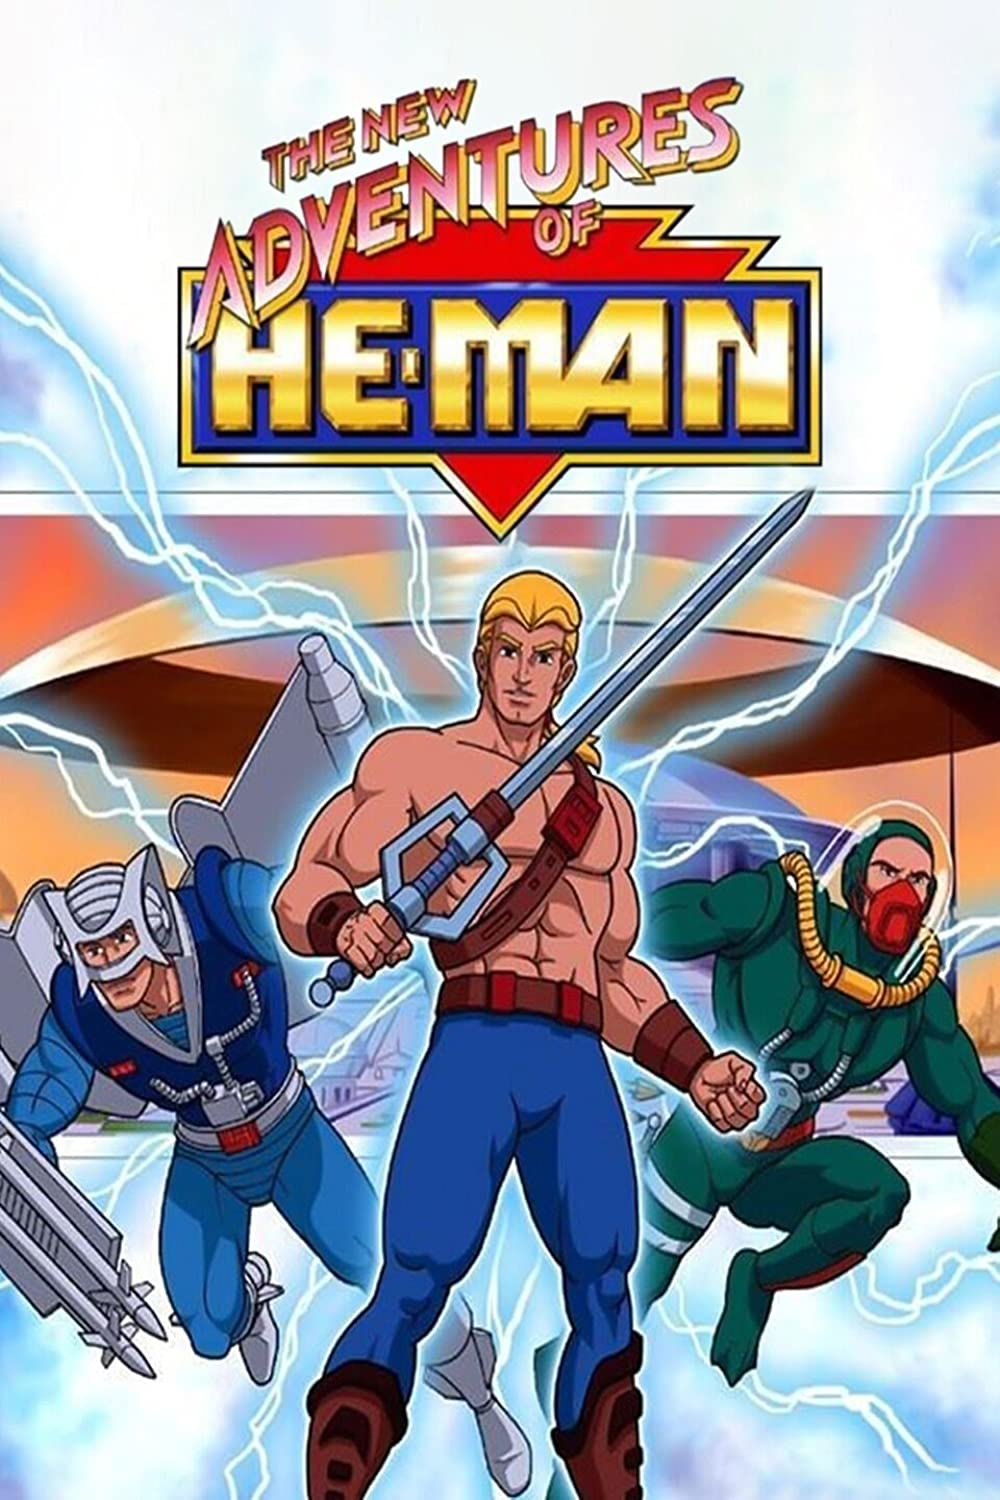 The New Adventures of He-Man, 1989